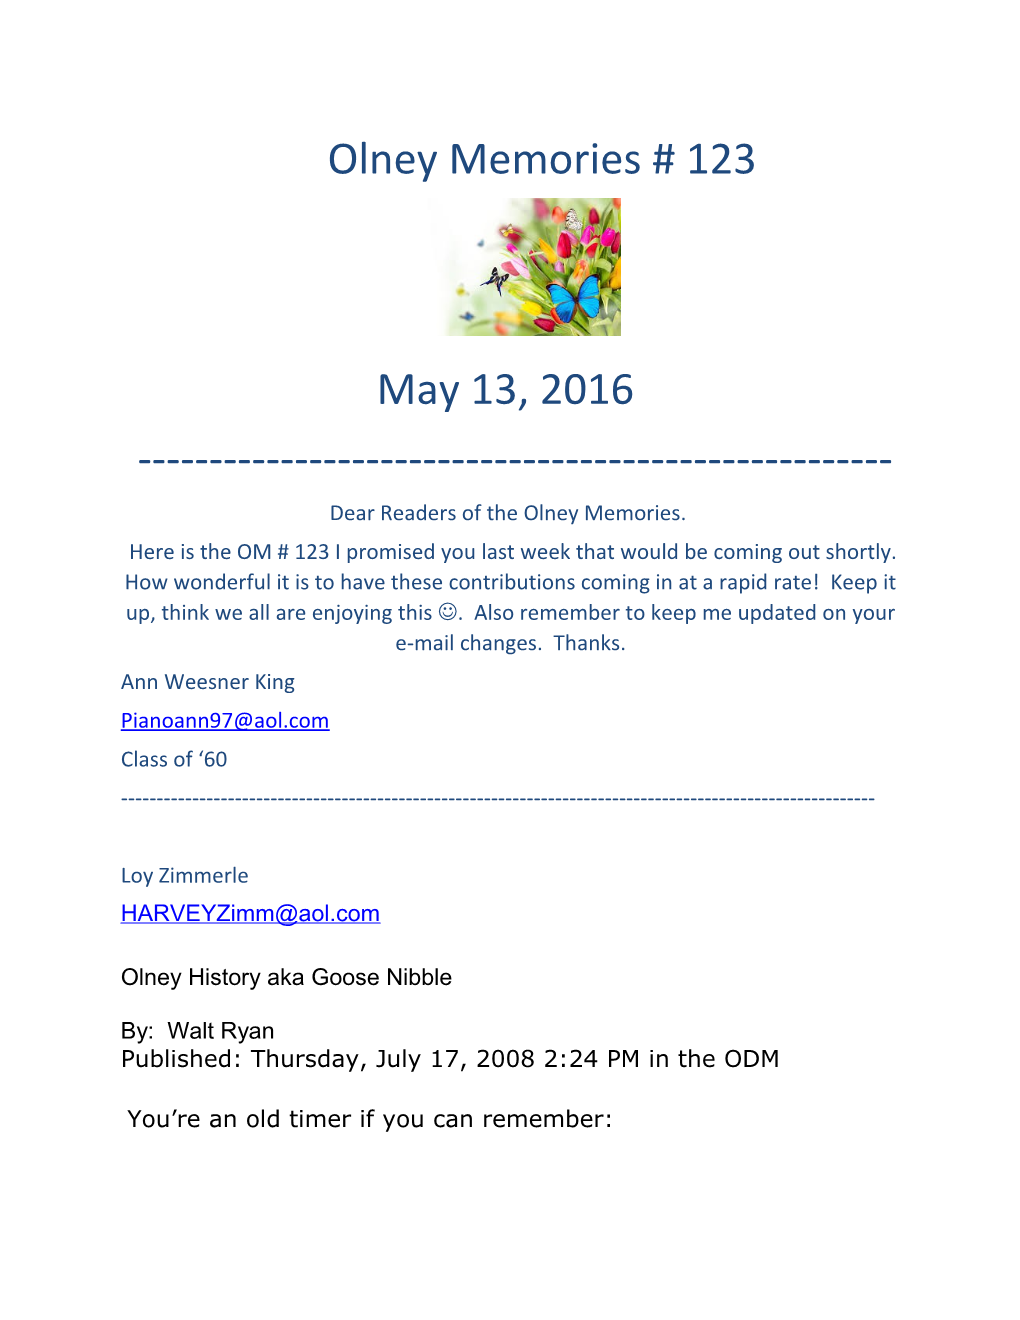 Dear Readers of the Olney Memories